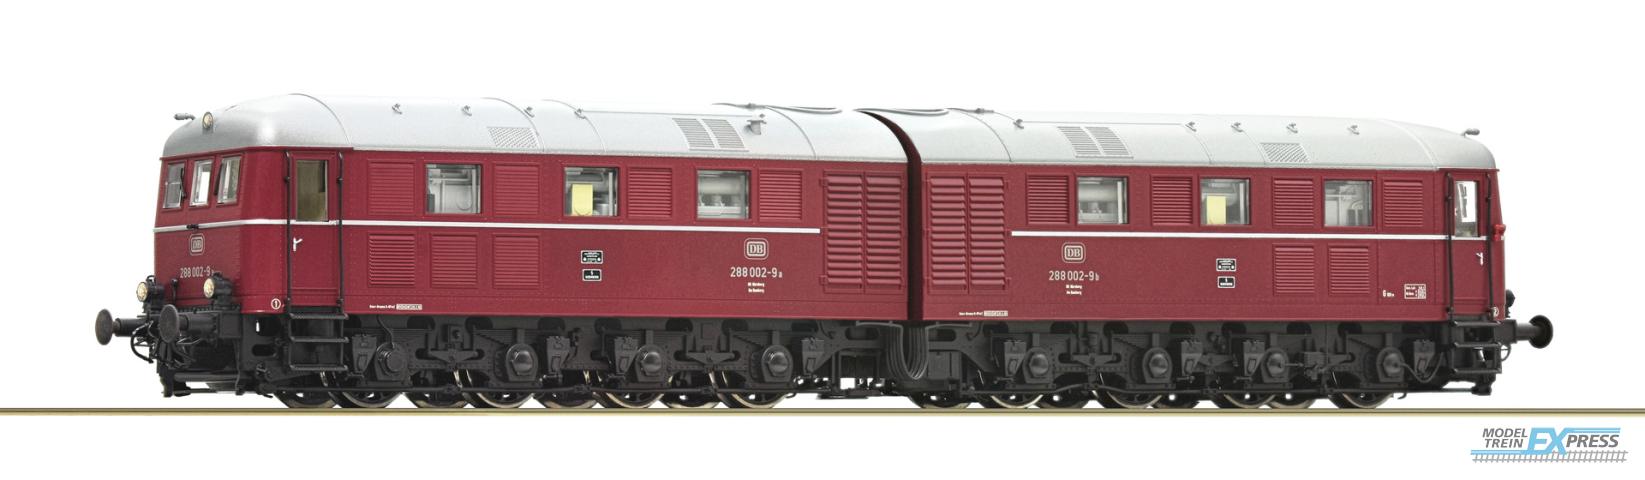 Roco 70115 Diesellok 288 002 DB